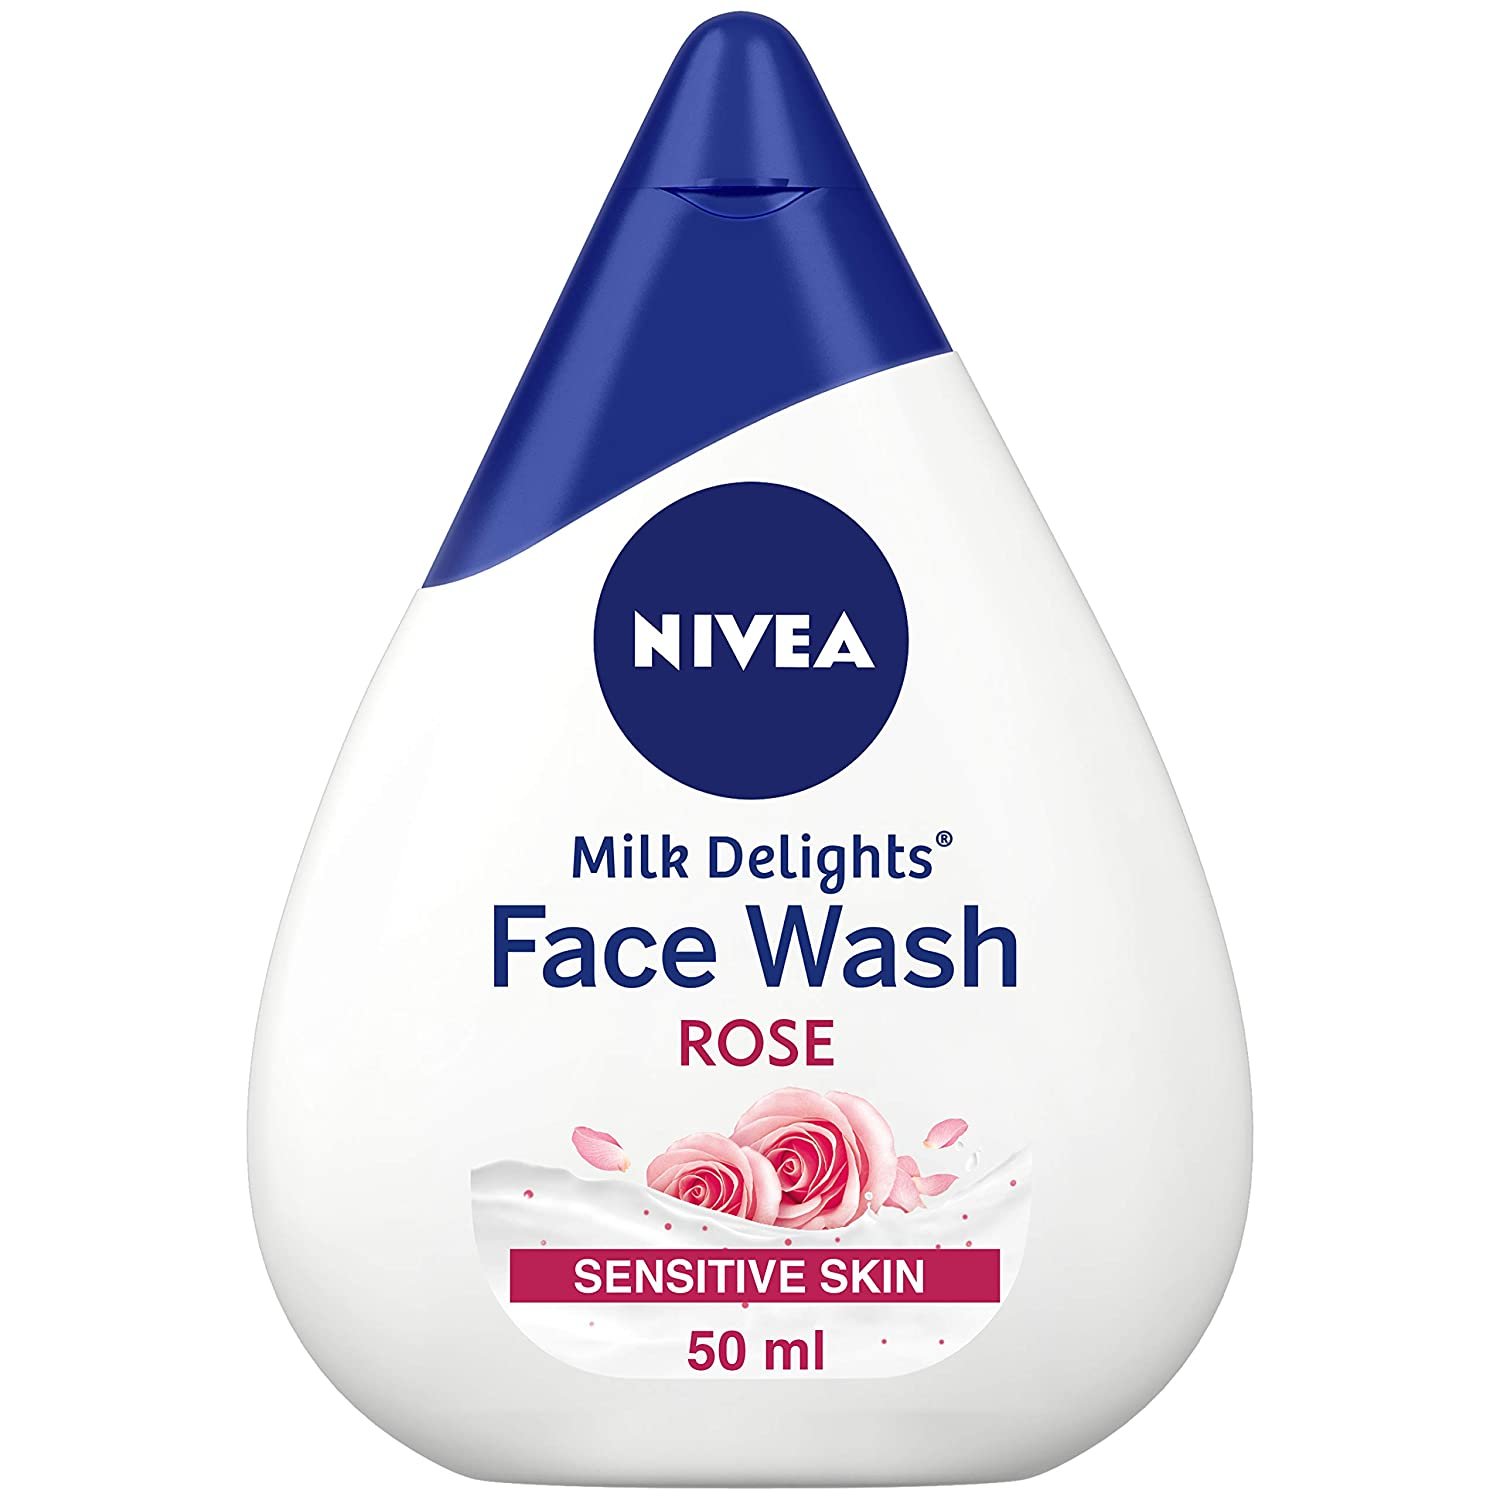 Nivea Milk Delights Face Wash Rose(50ml)